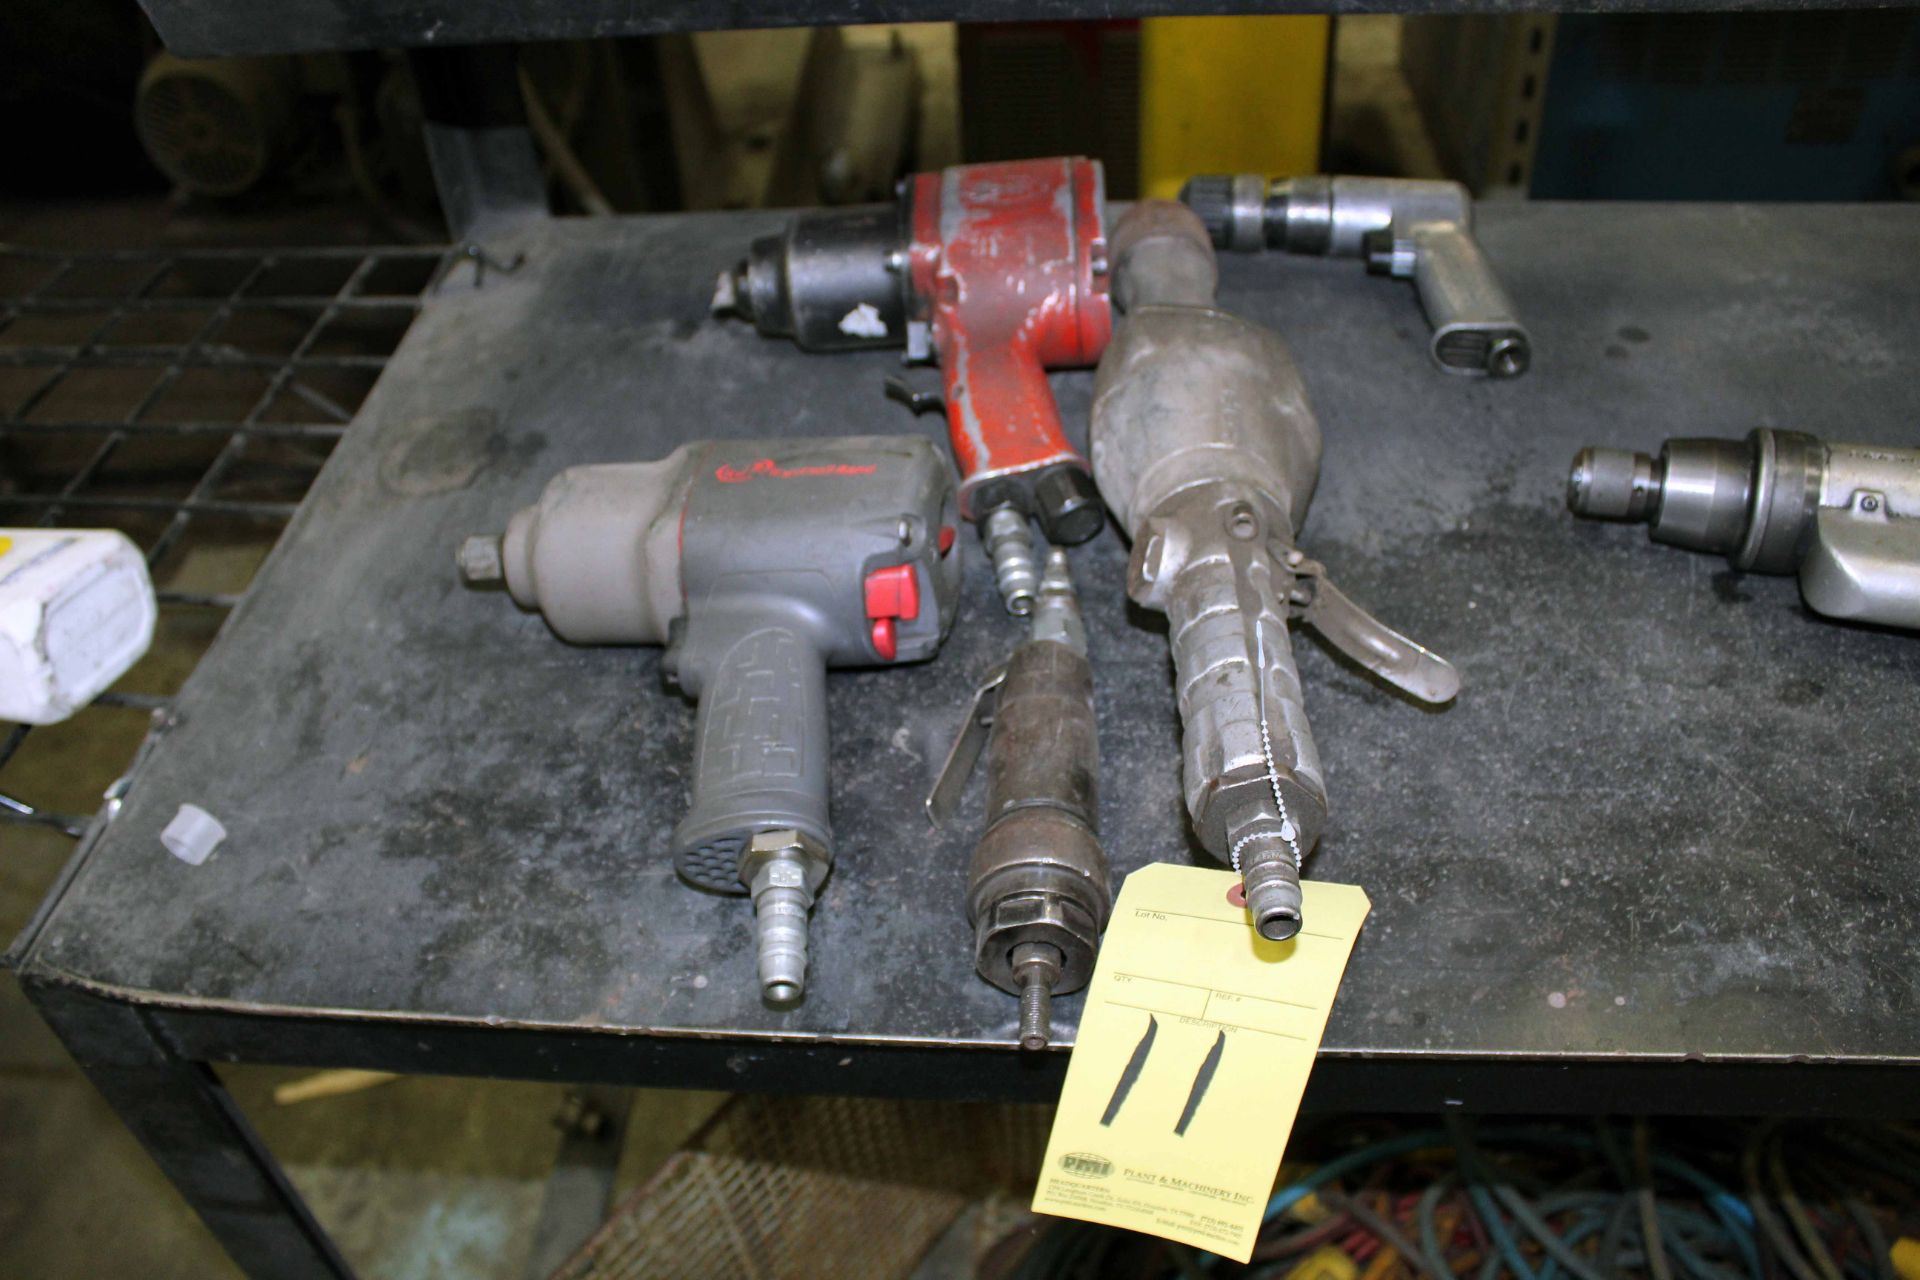 LOT CONSISTING OF: pneu. tools, impacts, drills, straight grinder